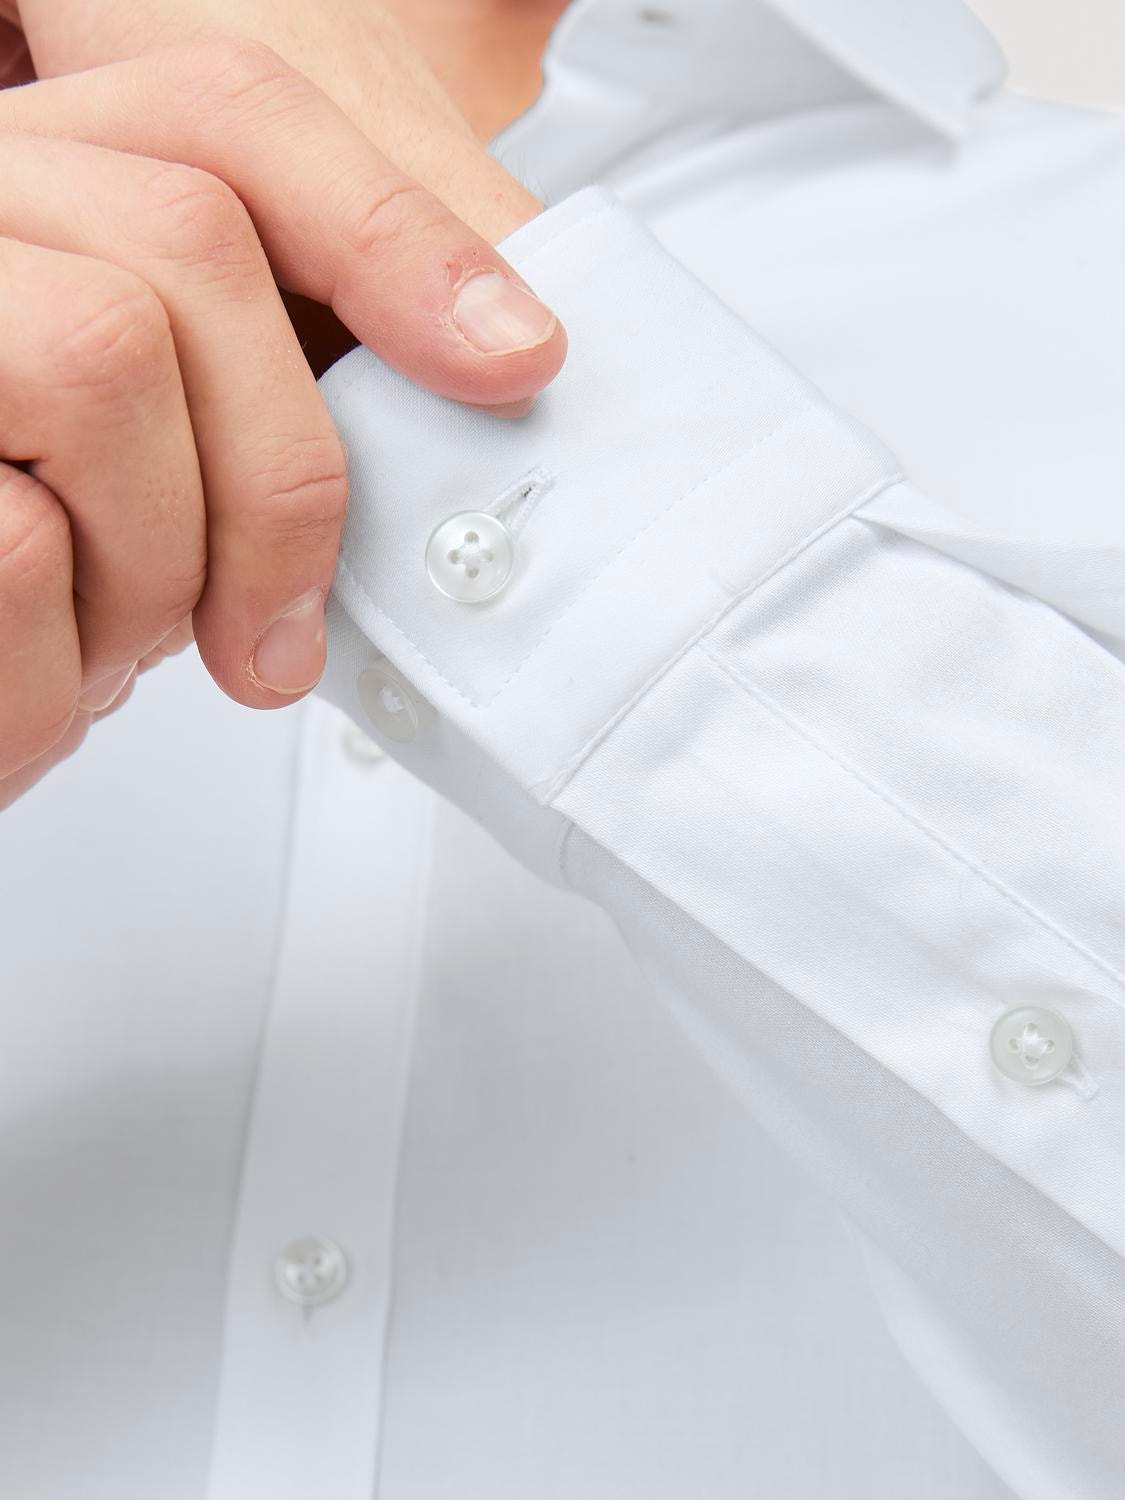 Jack & Jones Super Slim Fit Shirt -White - 12097662